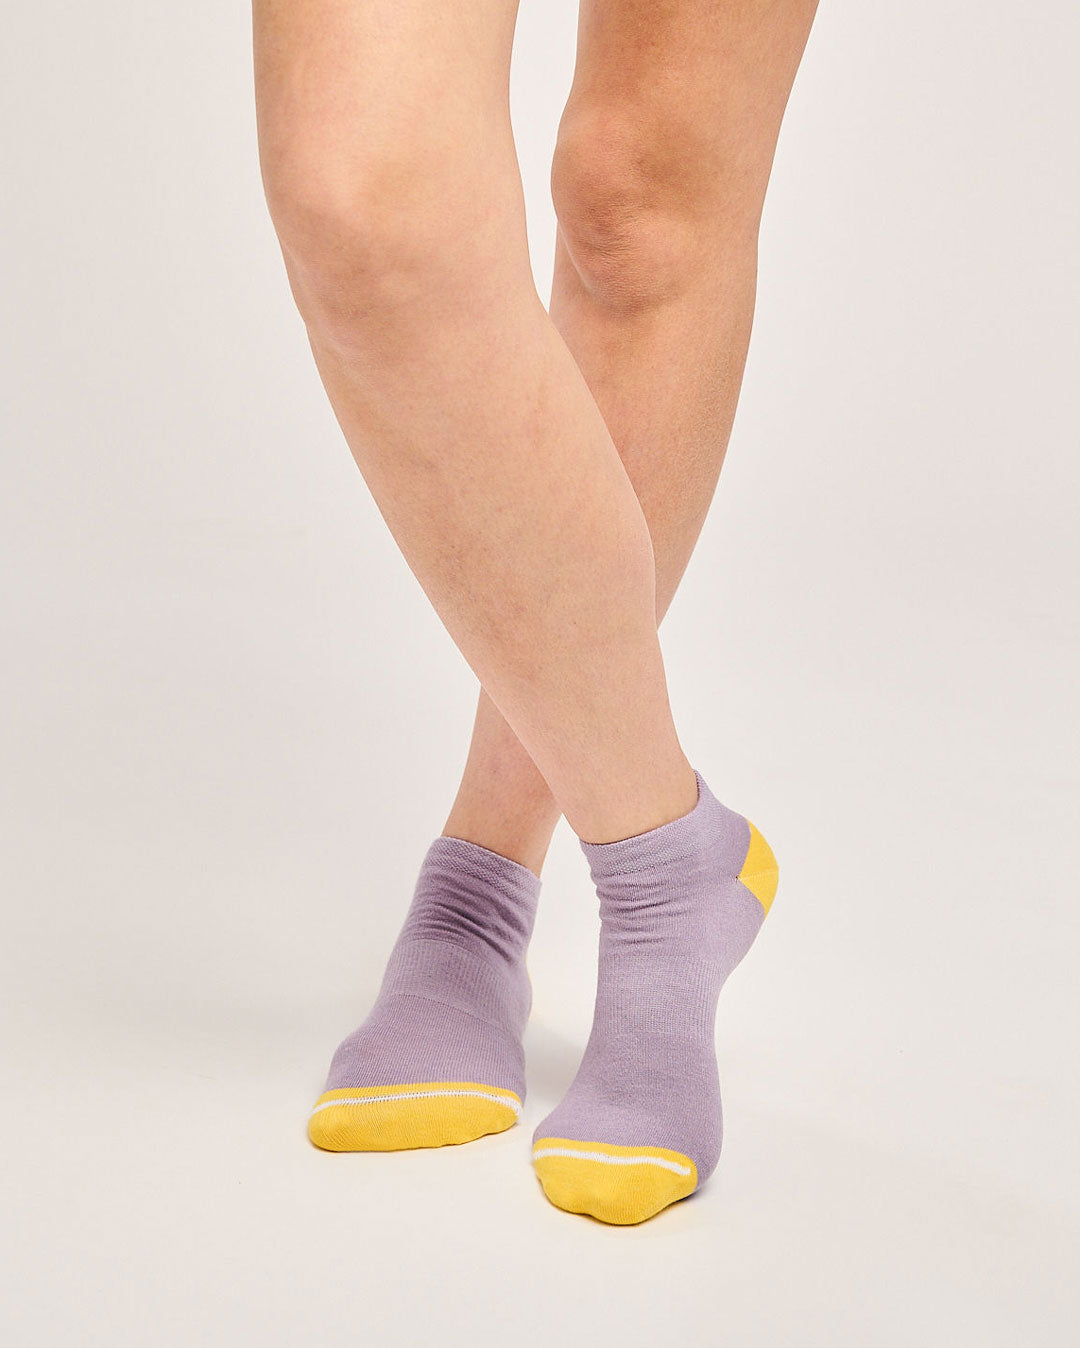 Seamless toe trainer socks for running. Arch support socks